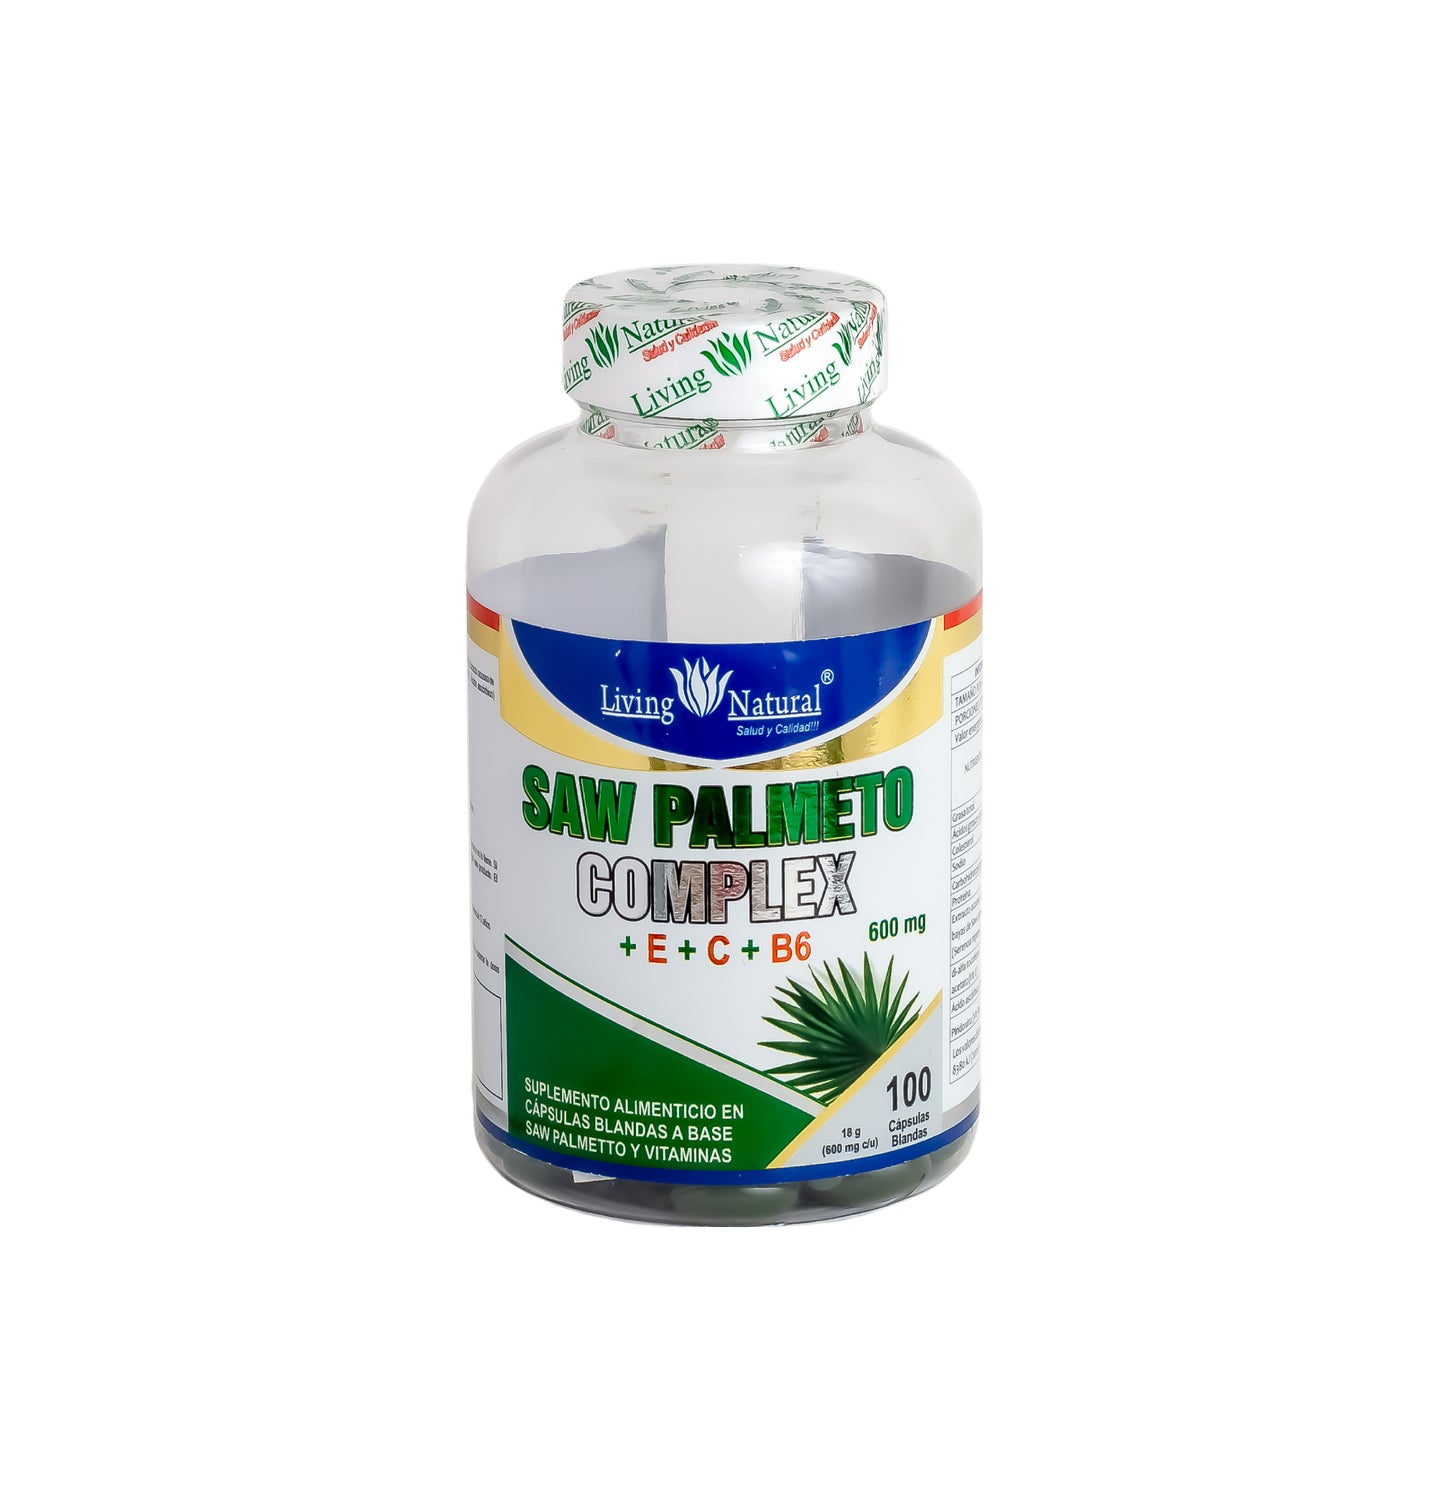 SAW PALMETO | 30X, 60X, 100X | 600 mg